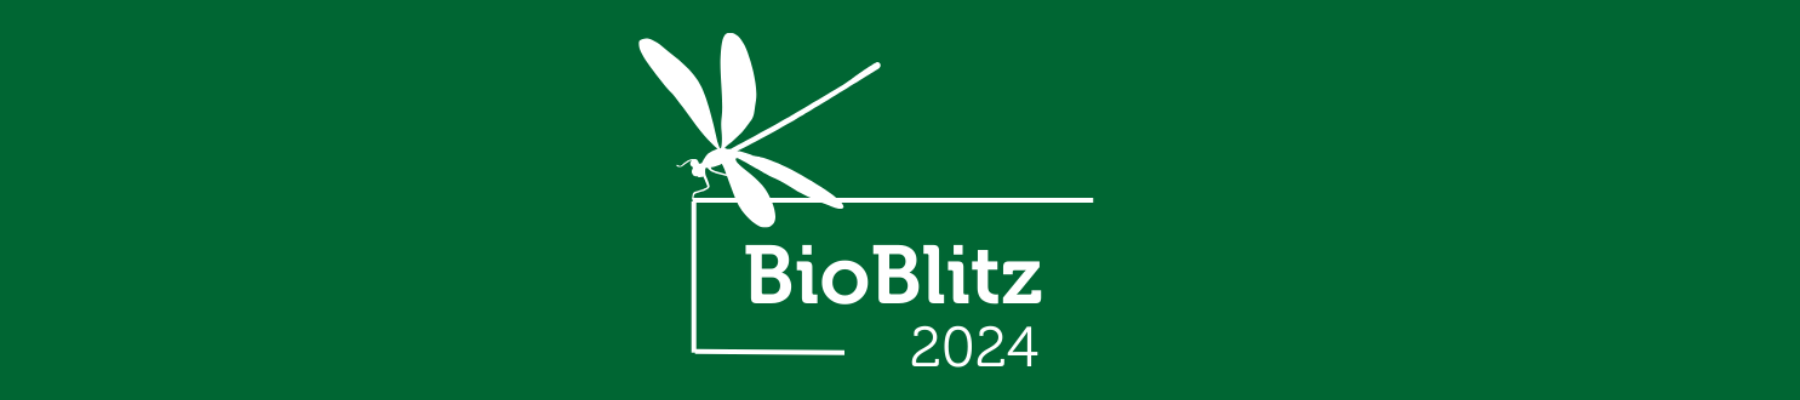 BioBlitz 2024 logo on green background